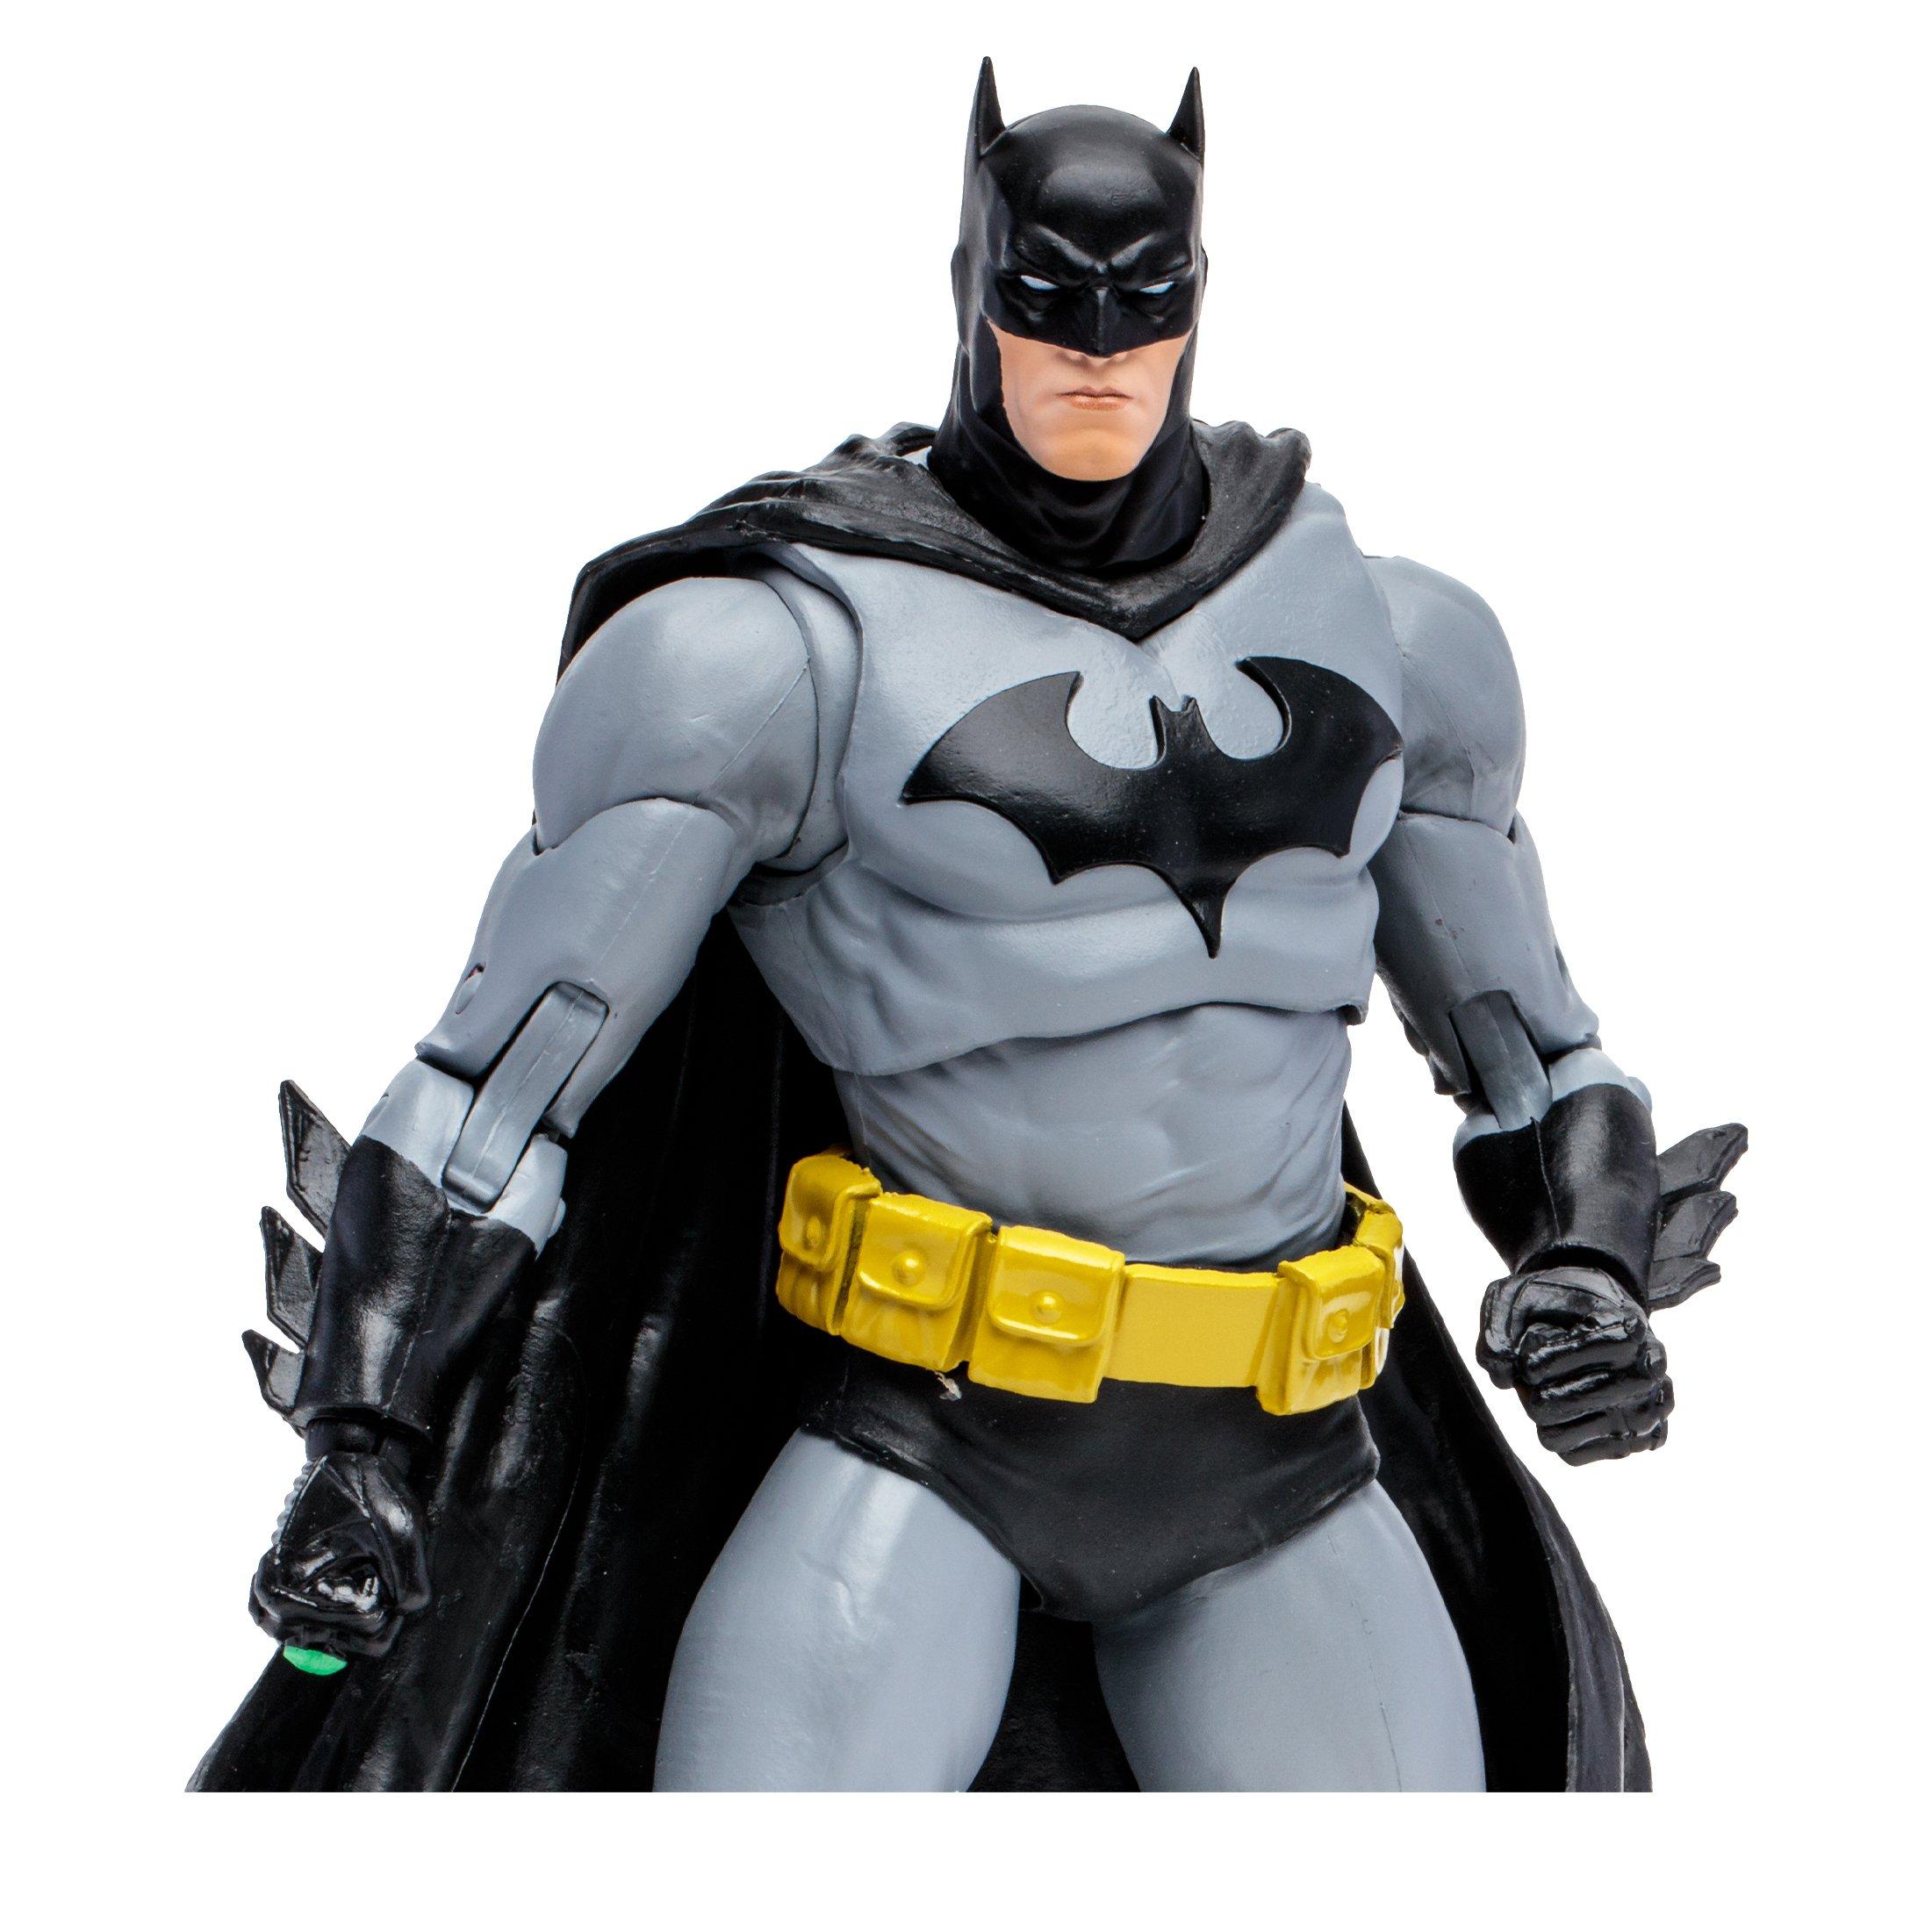 McFarlane Toys DC Multiverse Batman (Batman: Hush) 7-in Action Figure